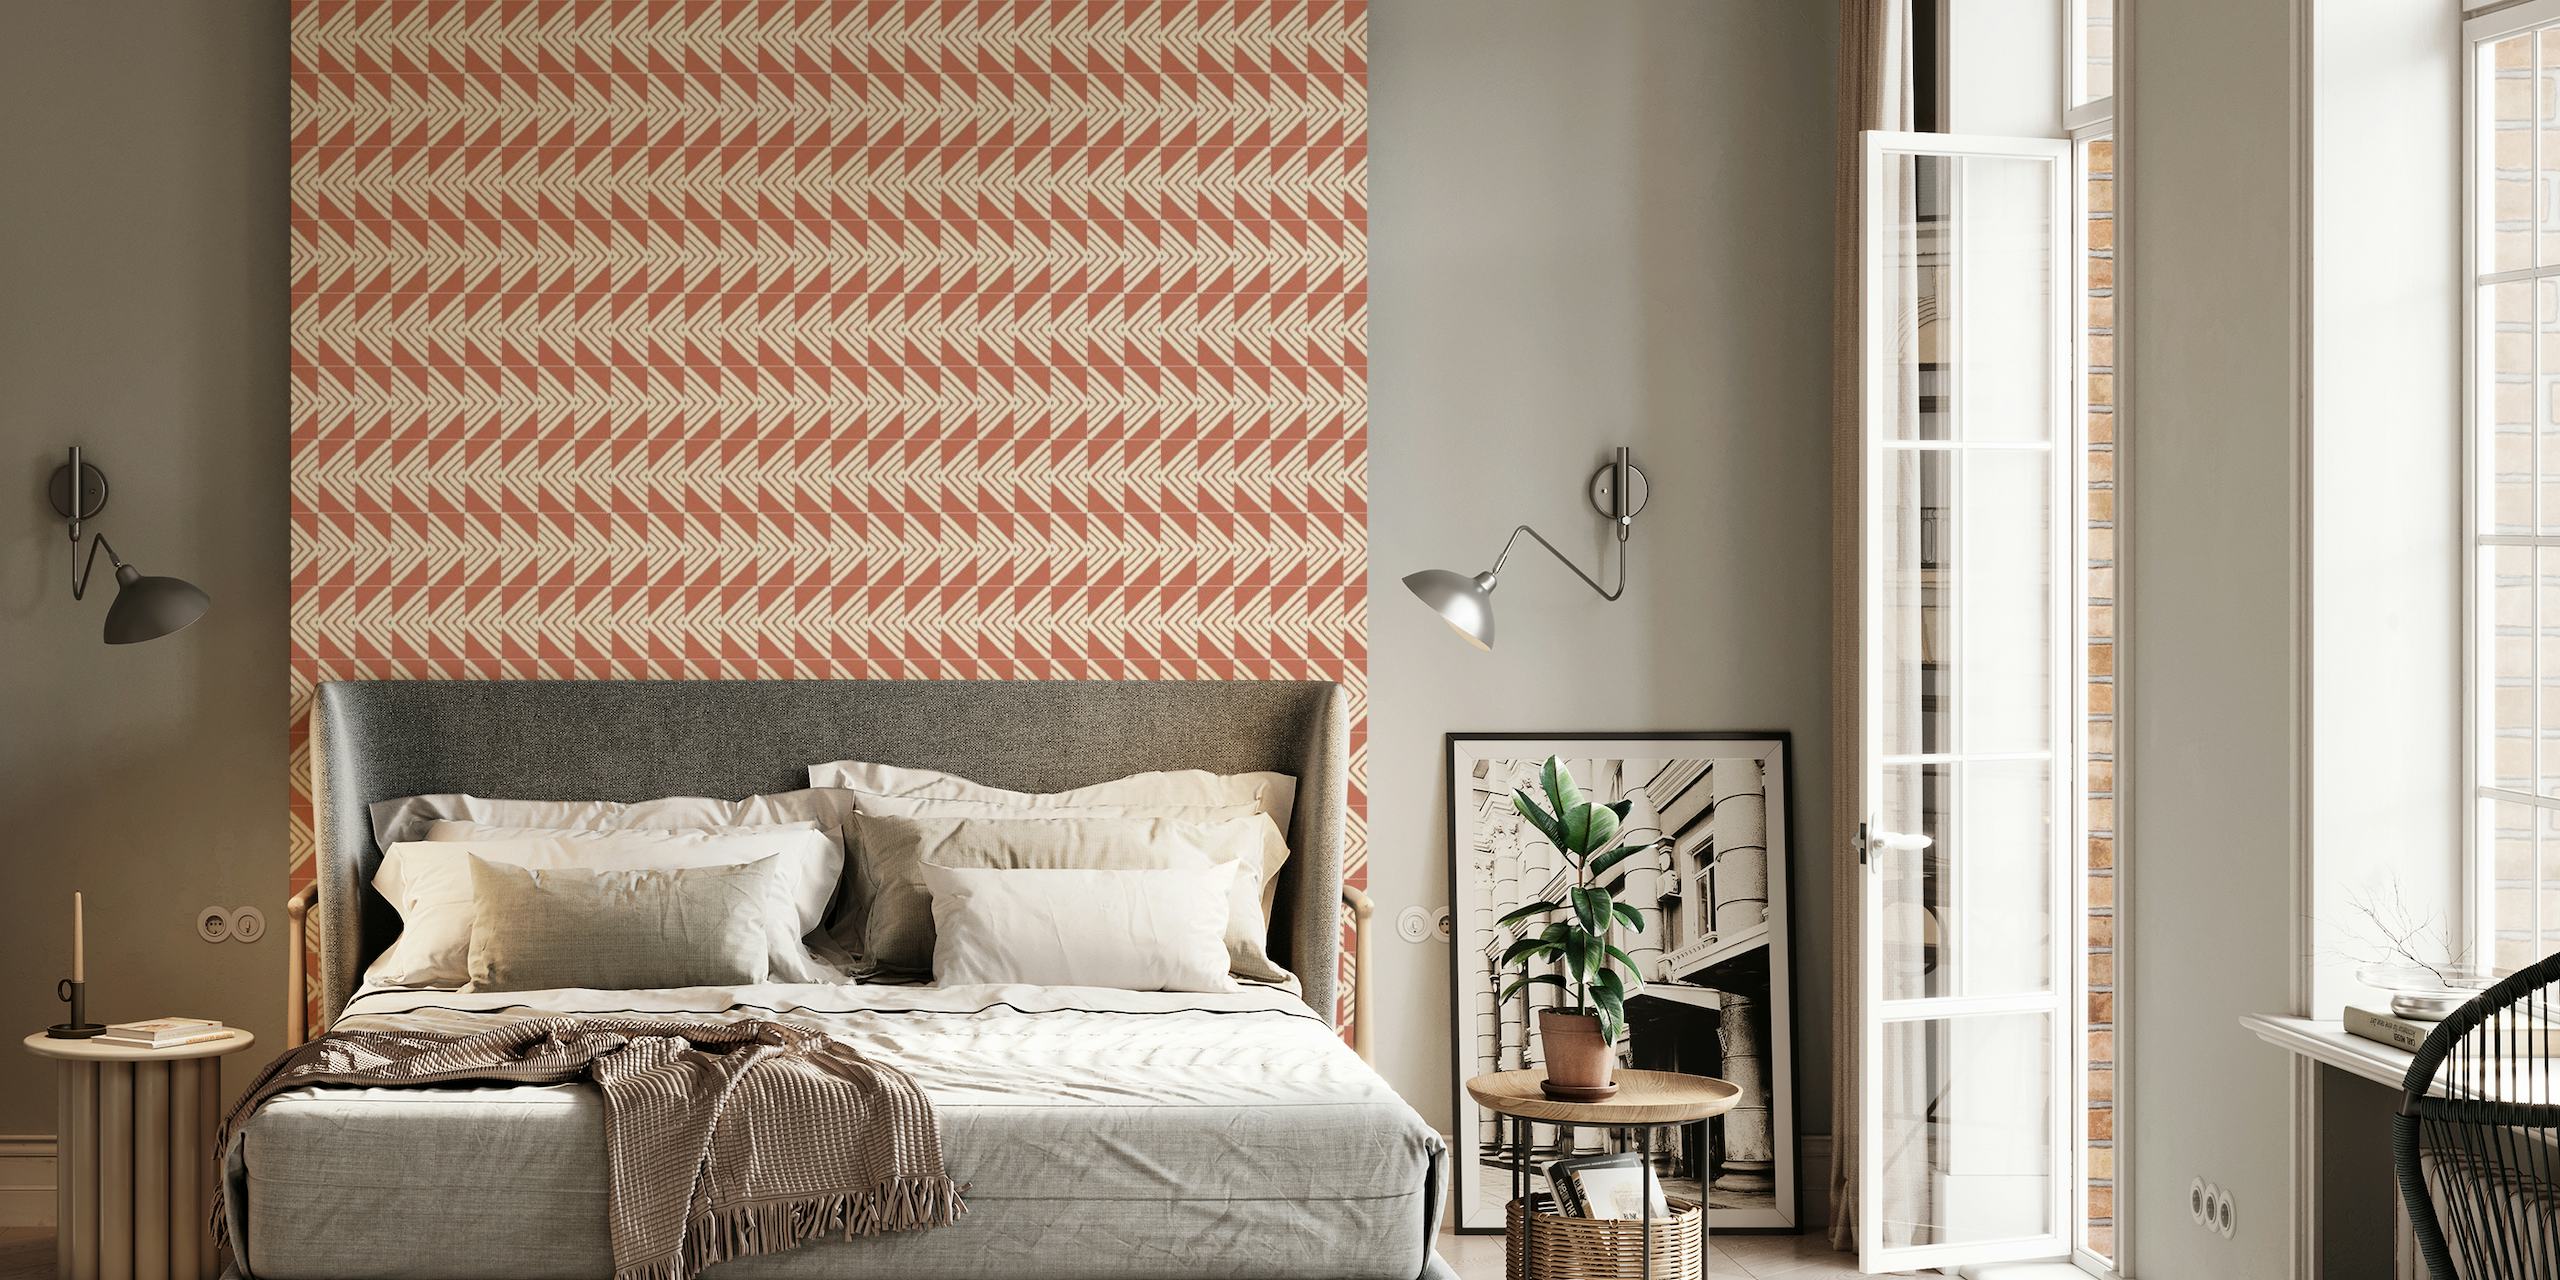 Rustic Sandstone Arrows Tiles wallpaper